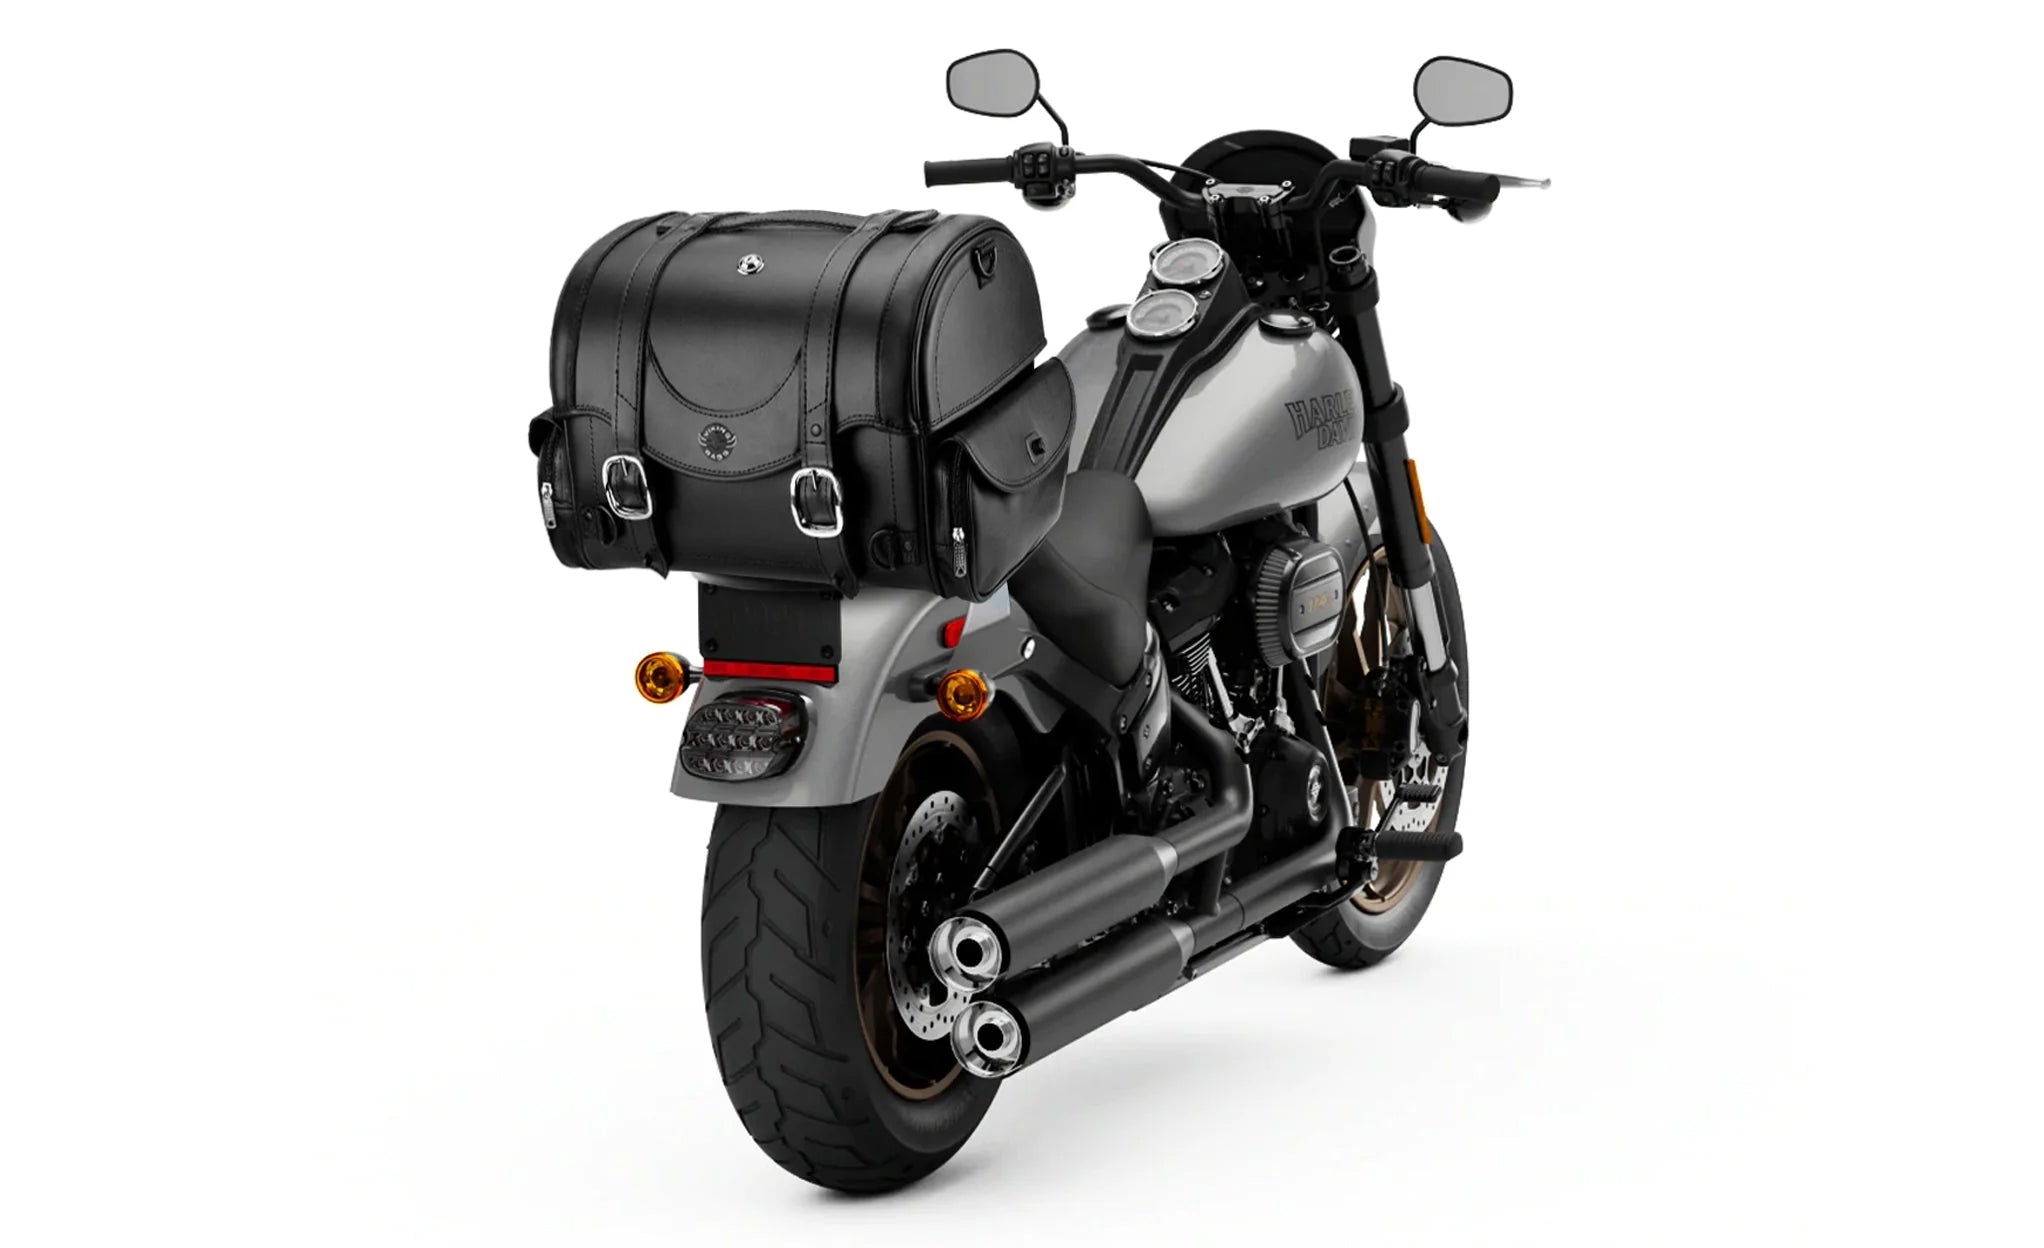 21L - Century Medium Leather Motorcycle Trunk Bag on Bike Photo @expand